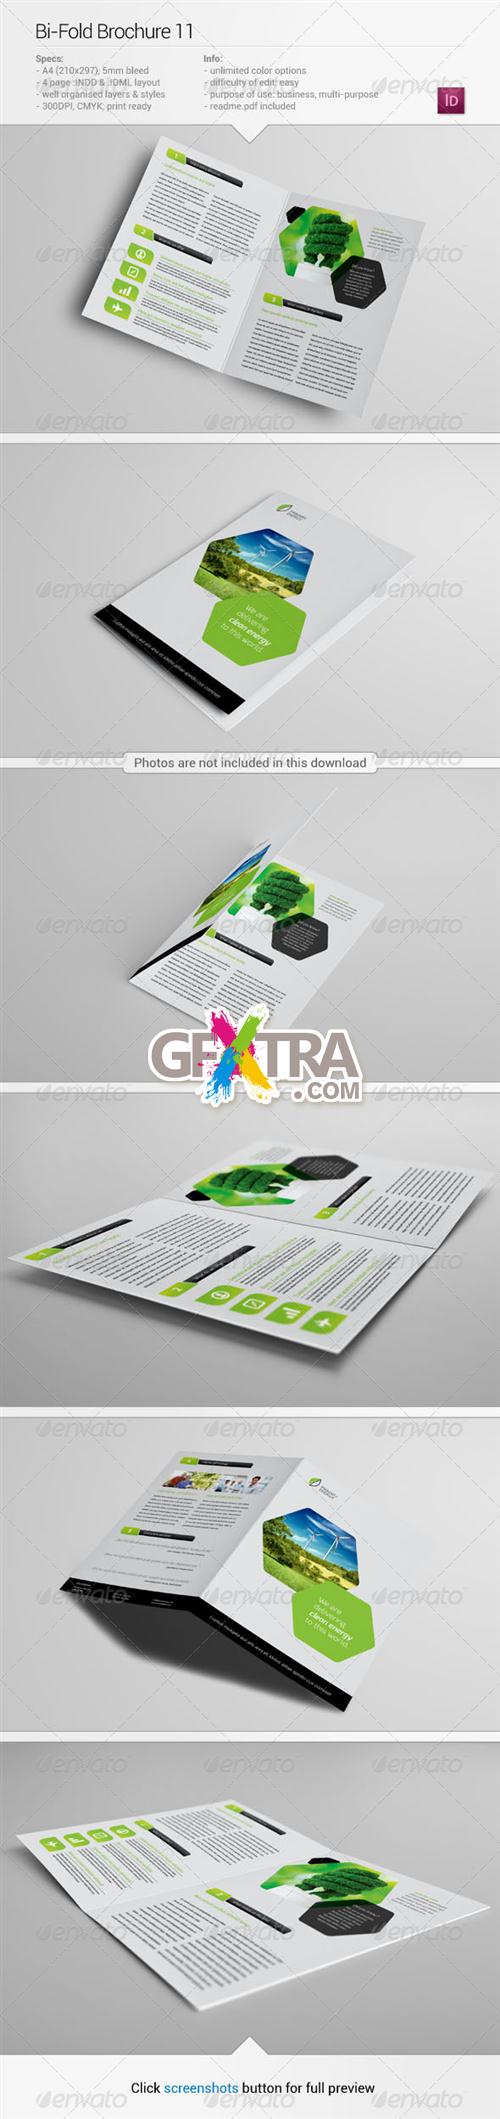 GraphicRiver - Bi-Fold Brochure 11